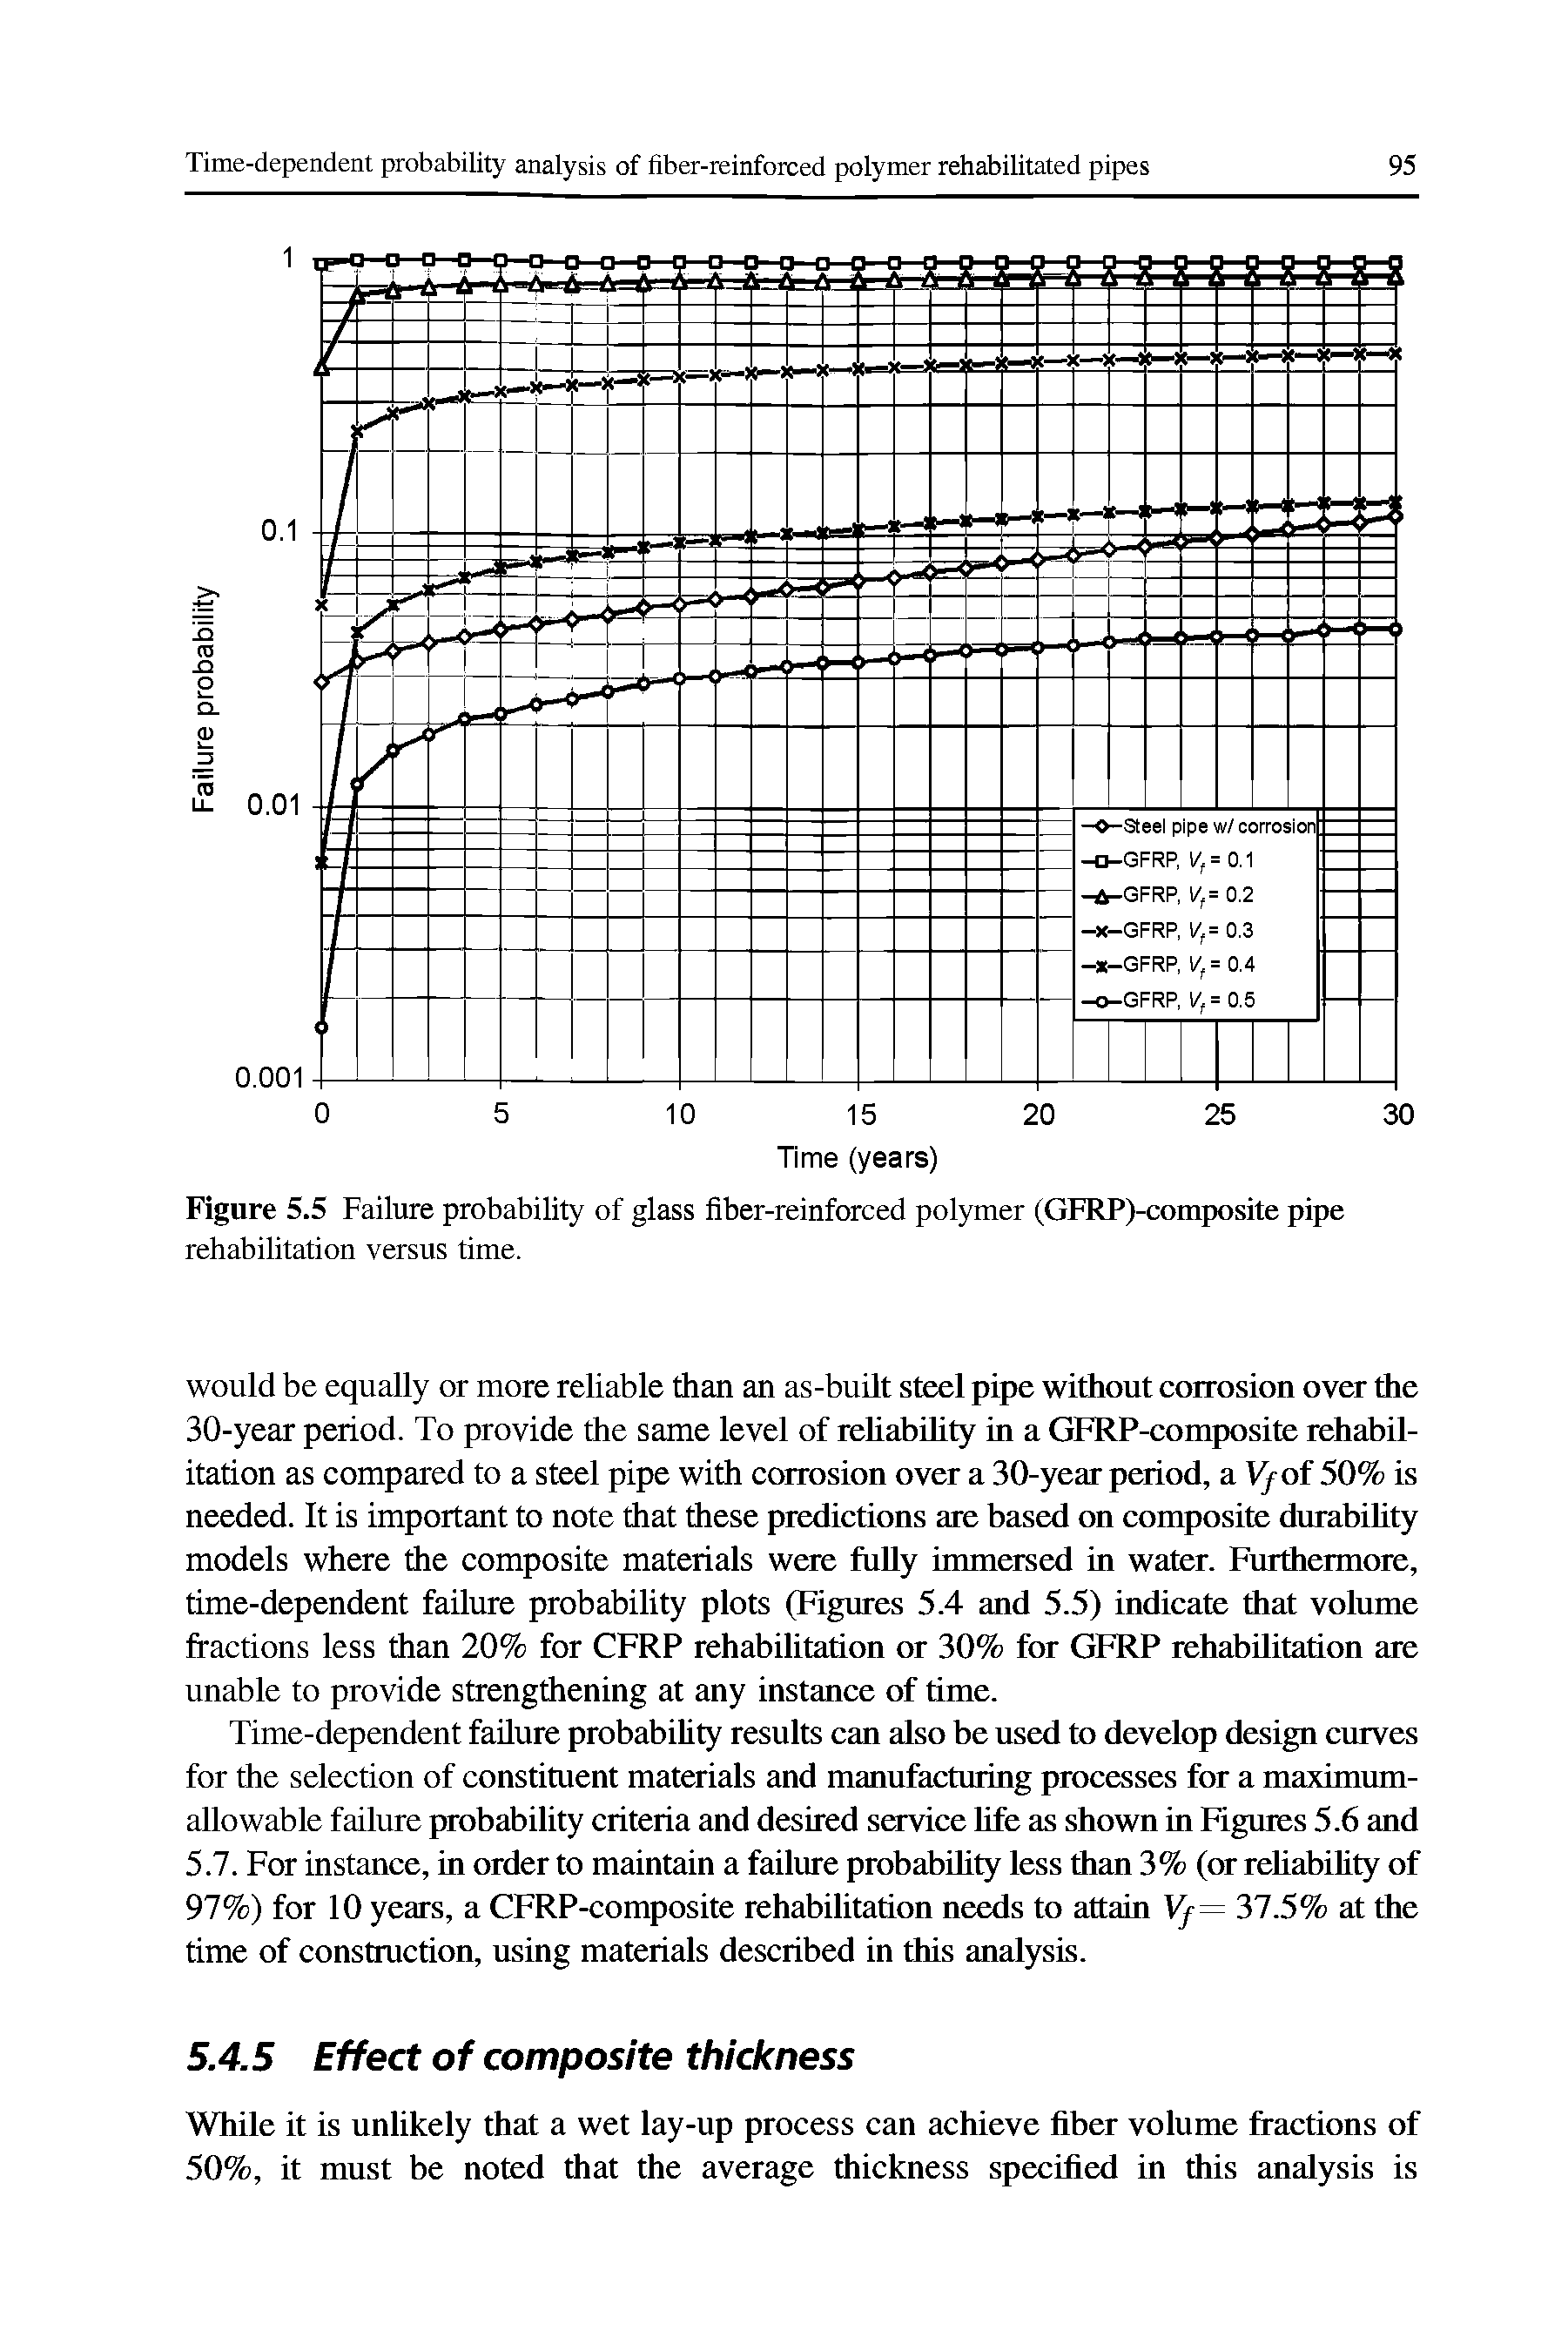 Figure 5.5 Failure probability of glass fiber-reinforced polymer (GFRP)-composite pipe rehabilitation versus time.